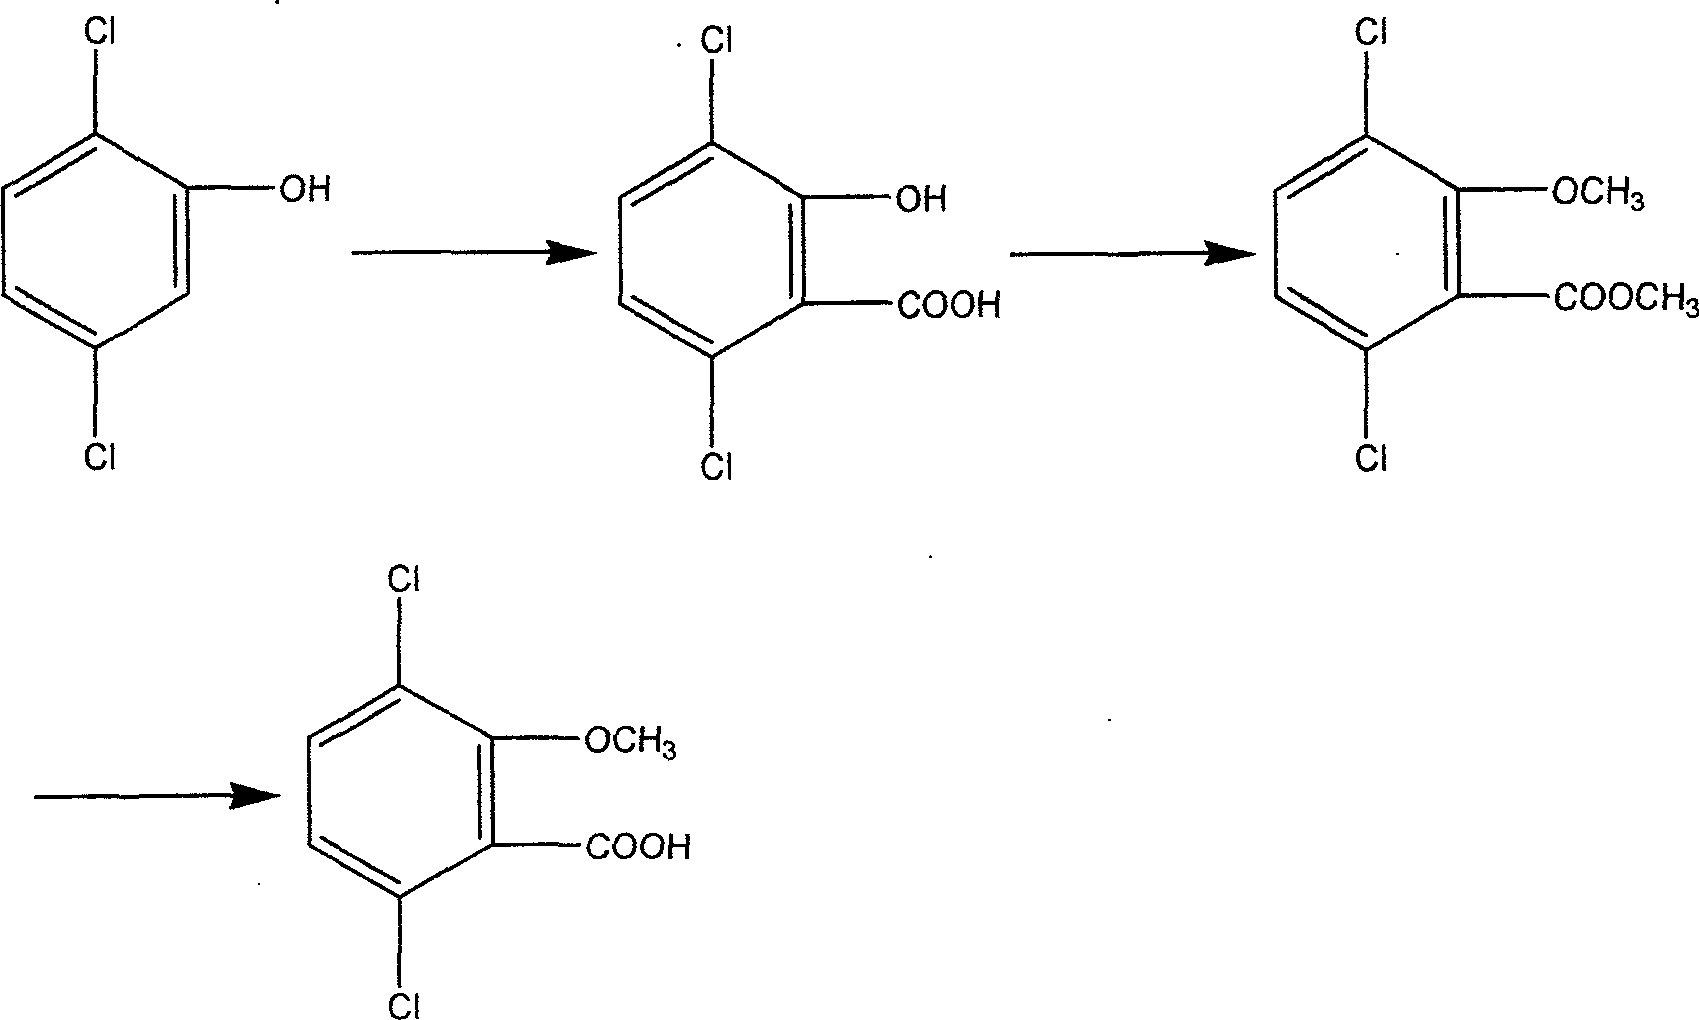 Process for catalyzing oxidating synthesizing 2,5-dichlorophenol